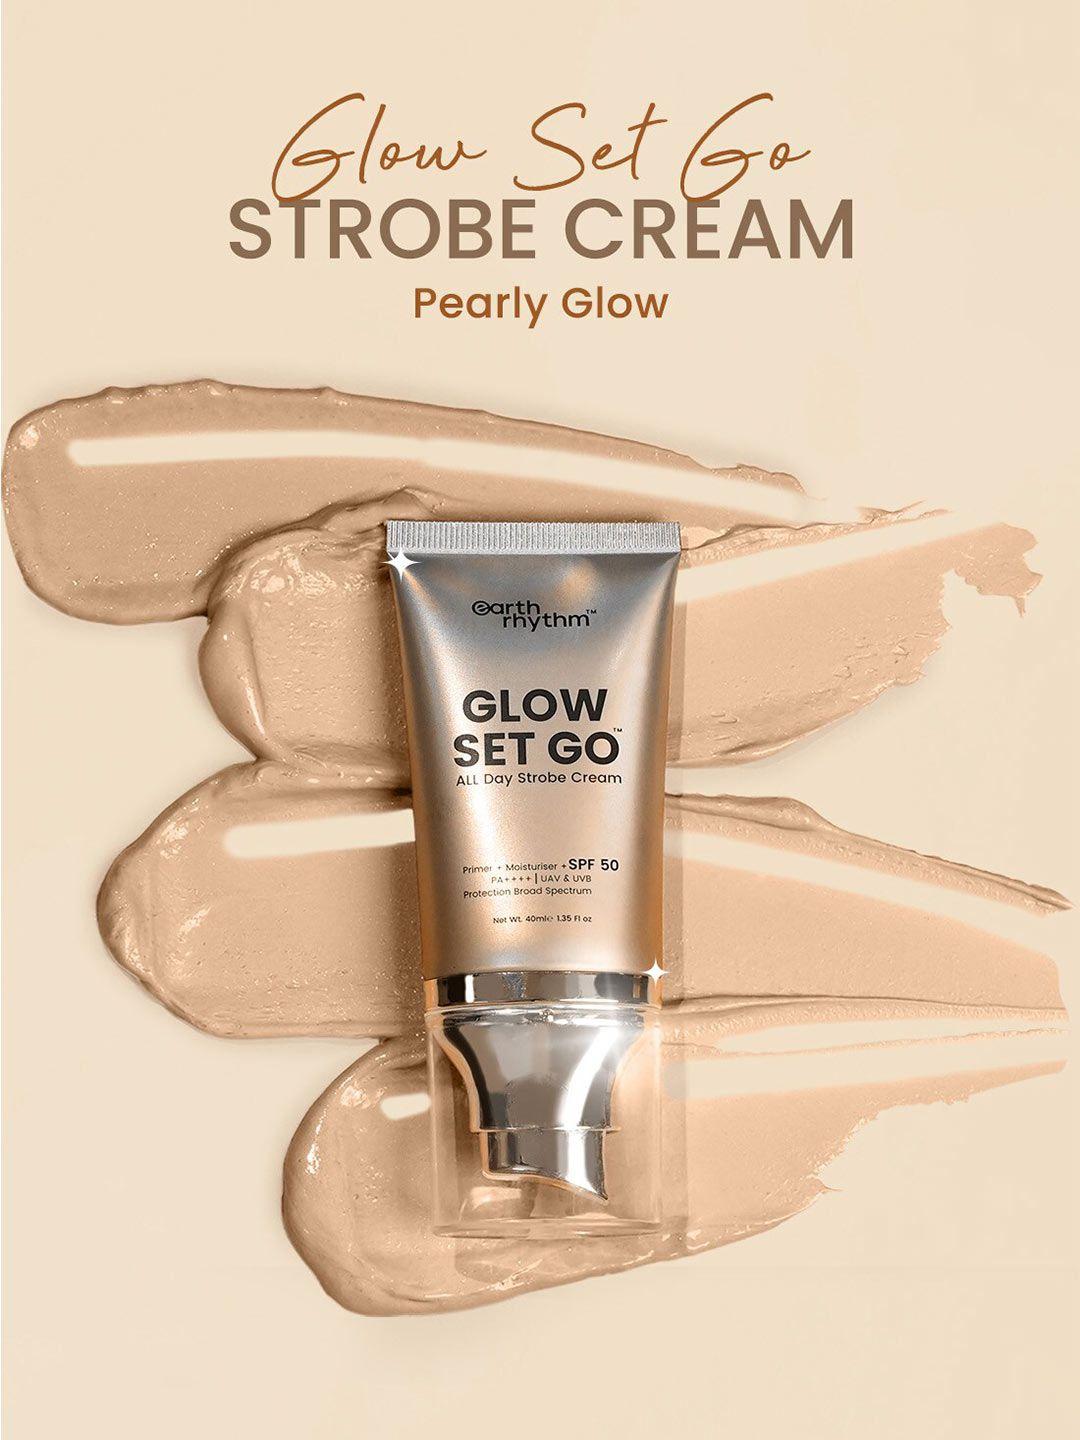 earth rhythm glow set go strobe cream primer & moisturiser with spf 50 - pearly glow